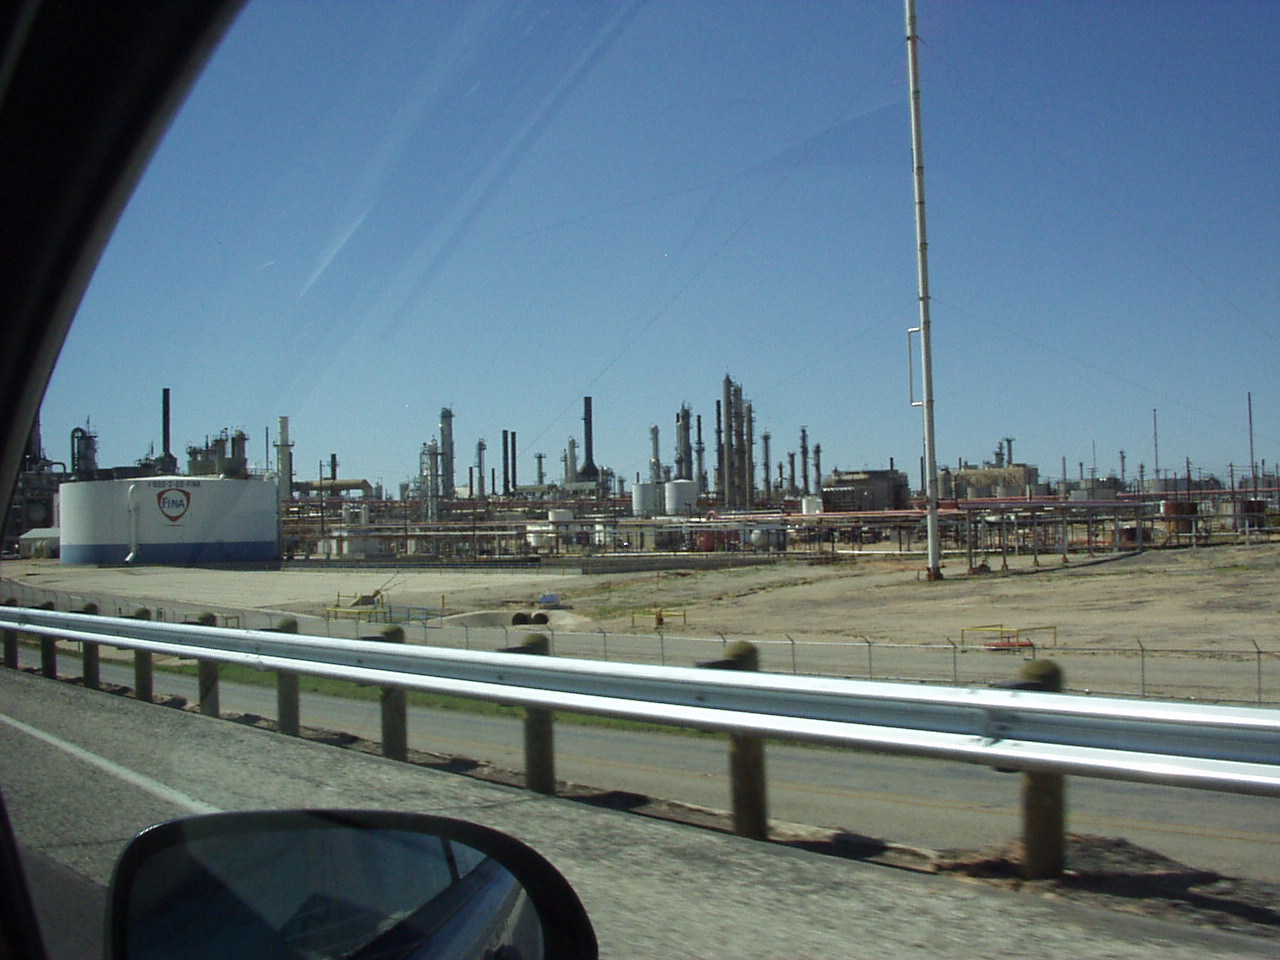 Landscape/OilRefinery.JPG